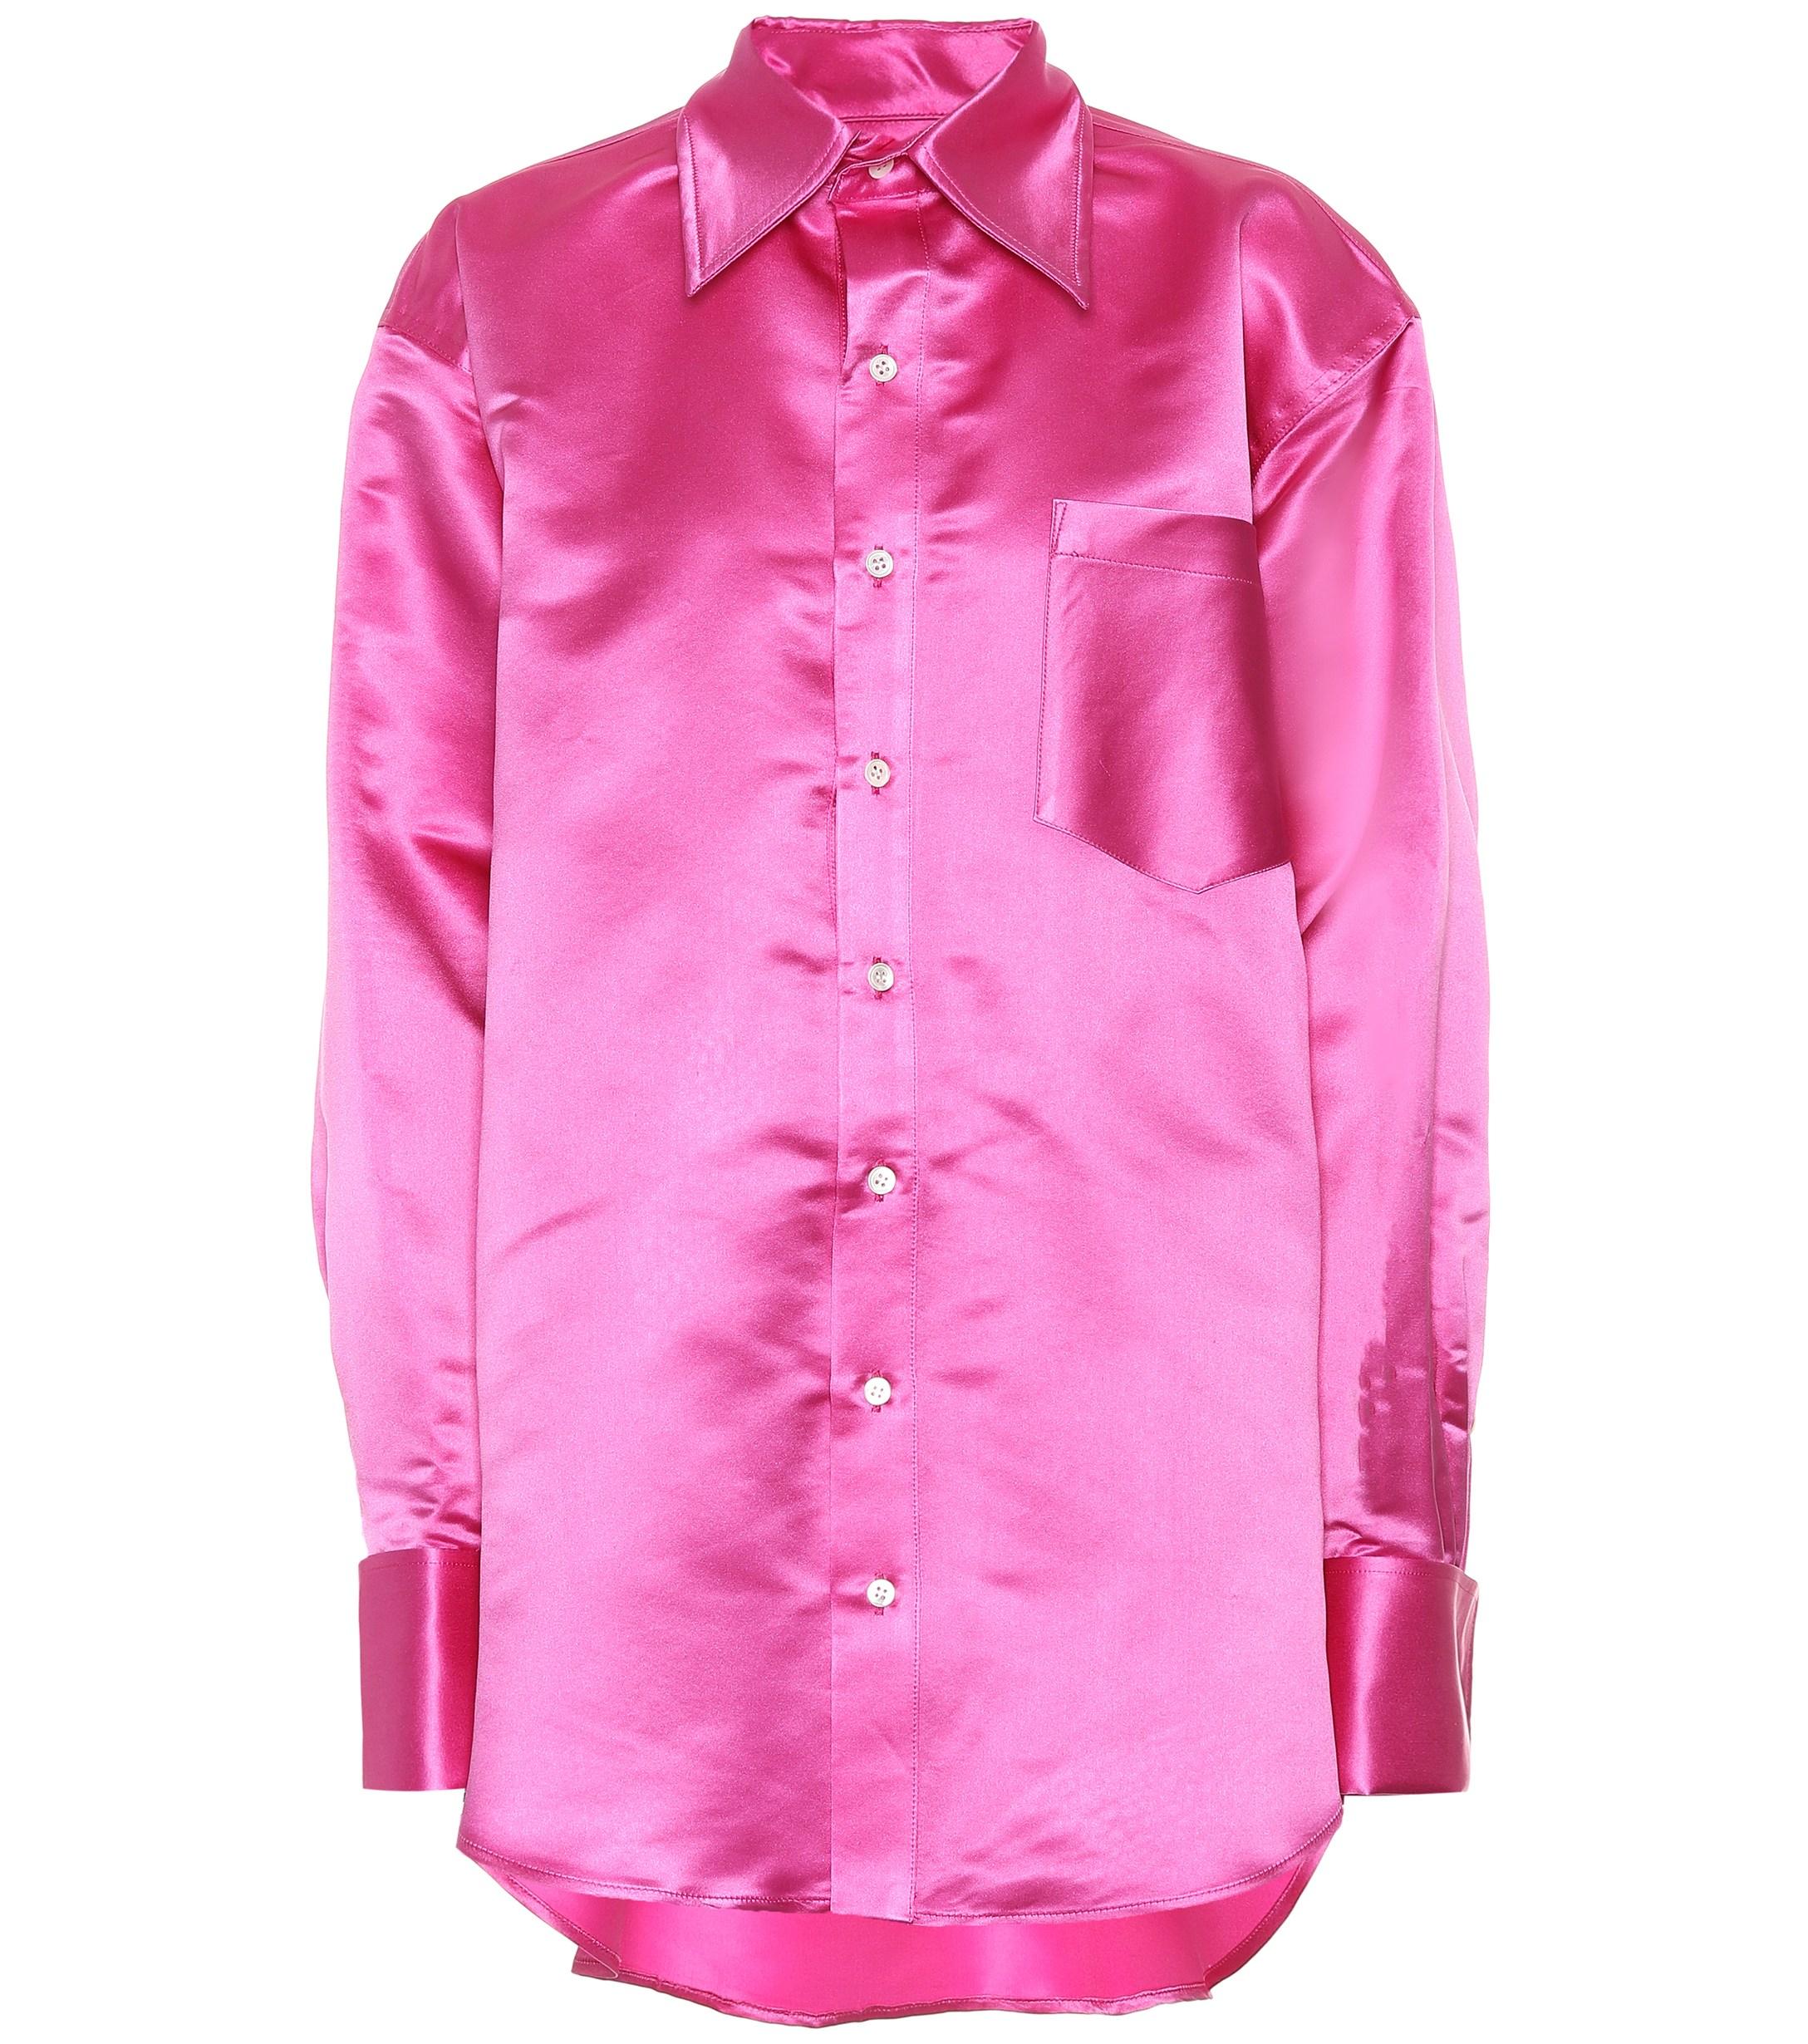 Matthew Adams Dolan Oversized Silk Shirt in Pink - Lyst